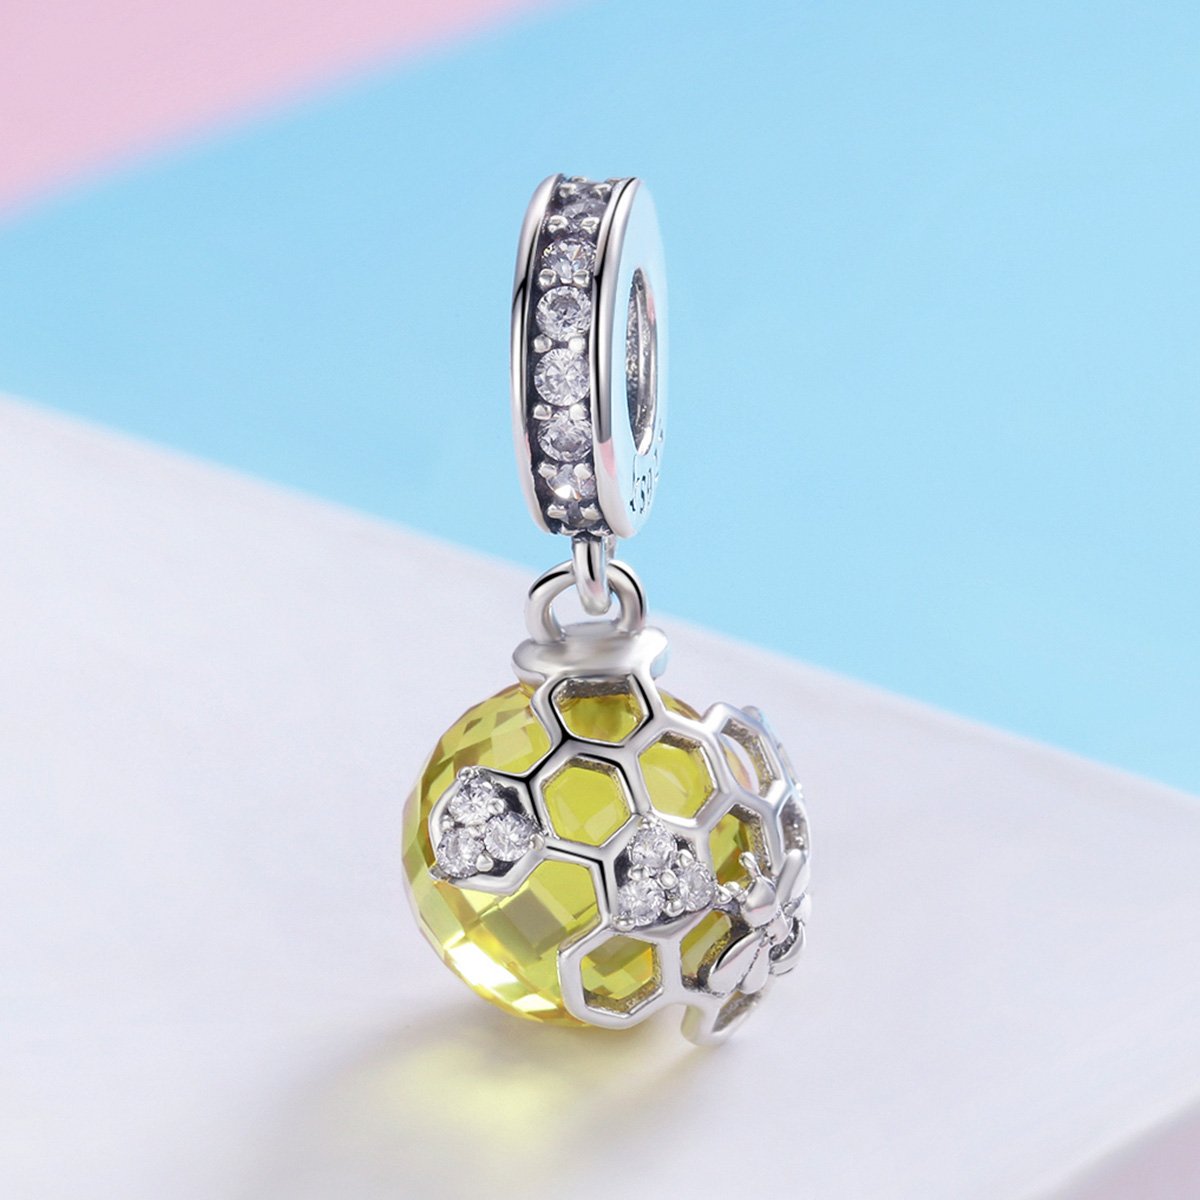 Sterling 925 silver charm the nest n honey pendant fits Pandora charm and European charm bracelet Xaxe.com